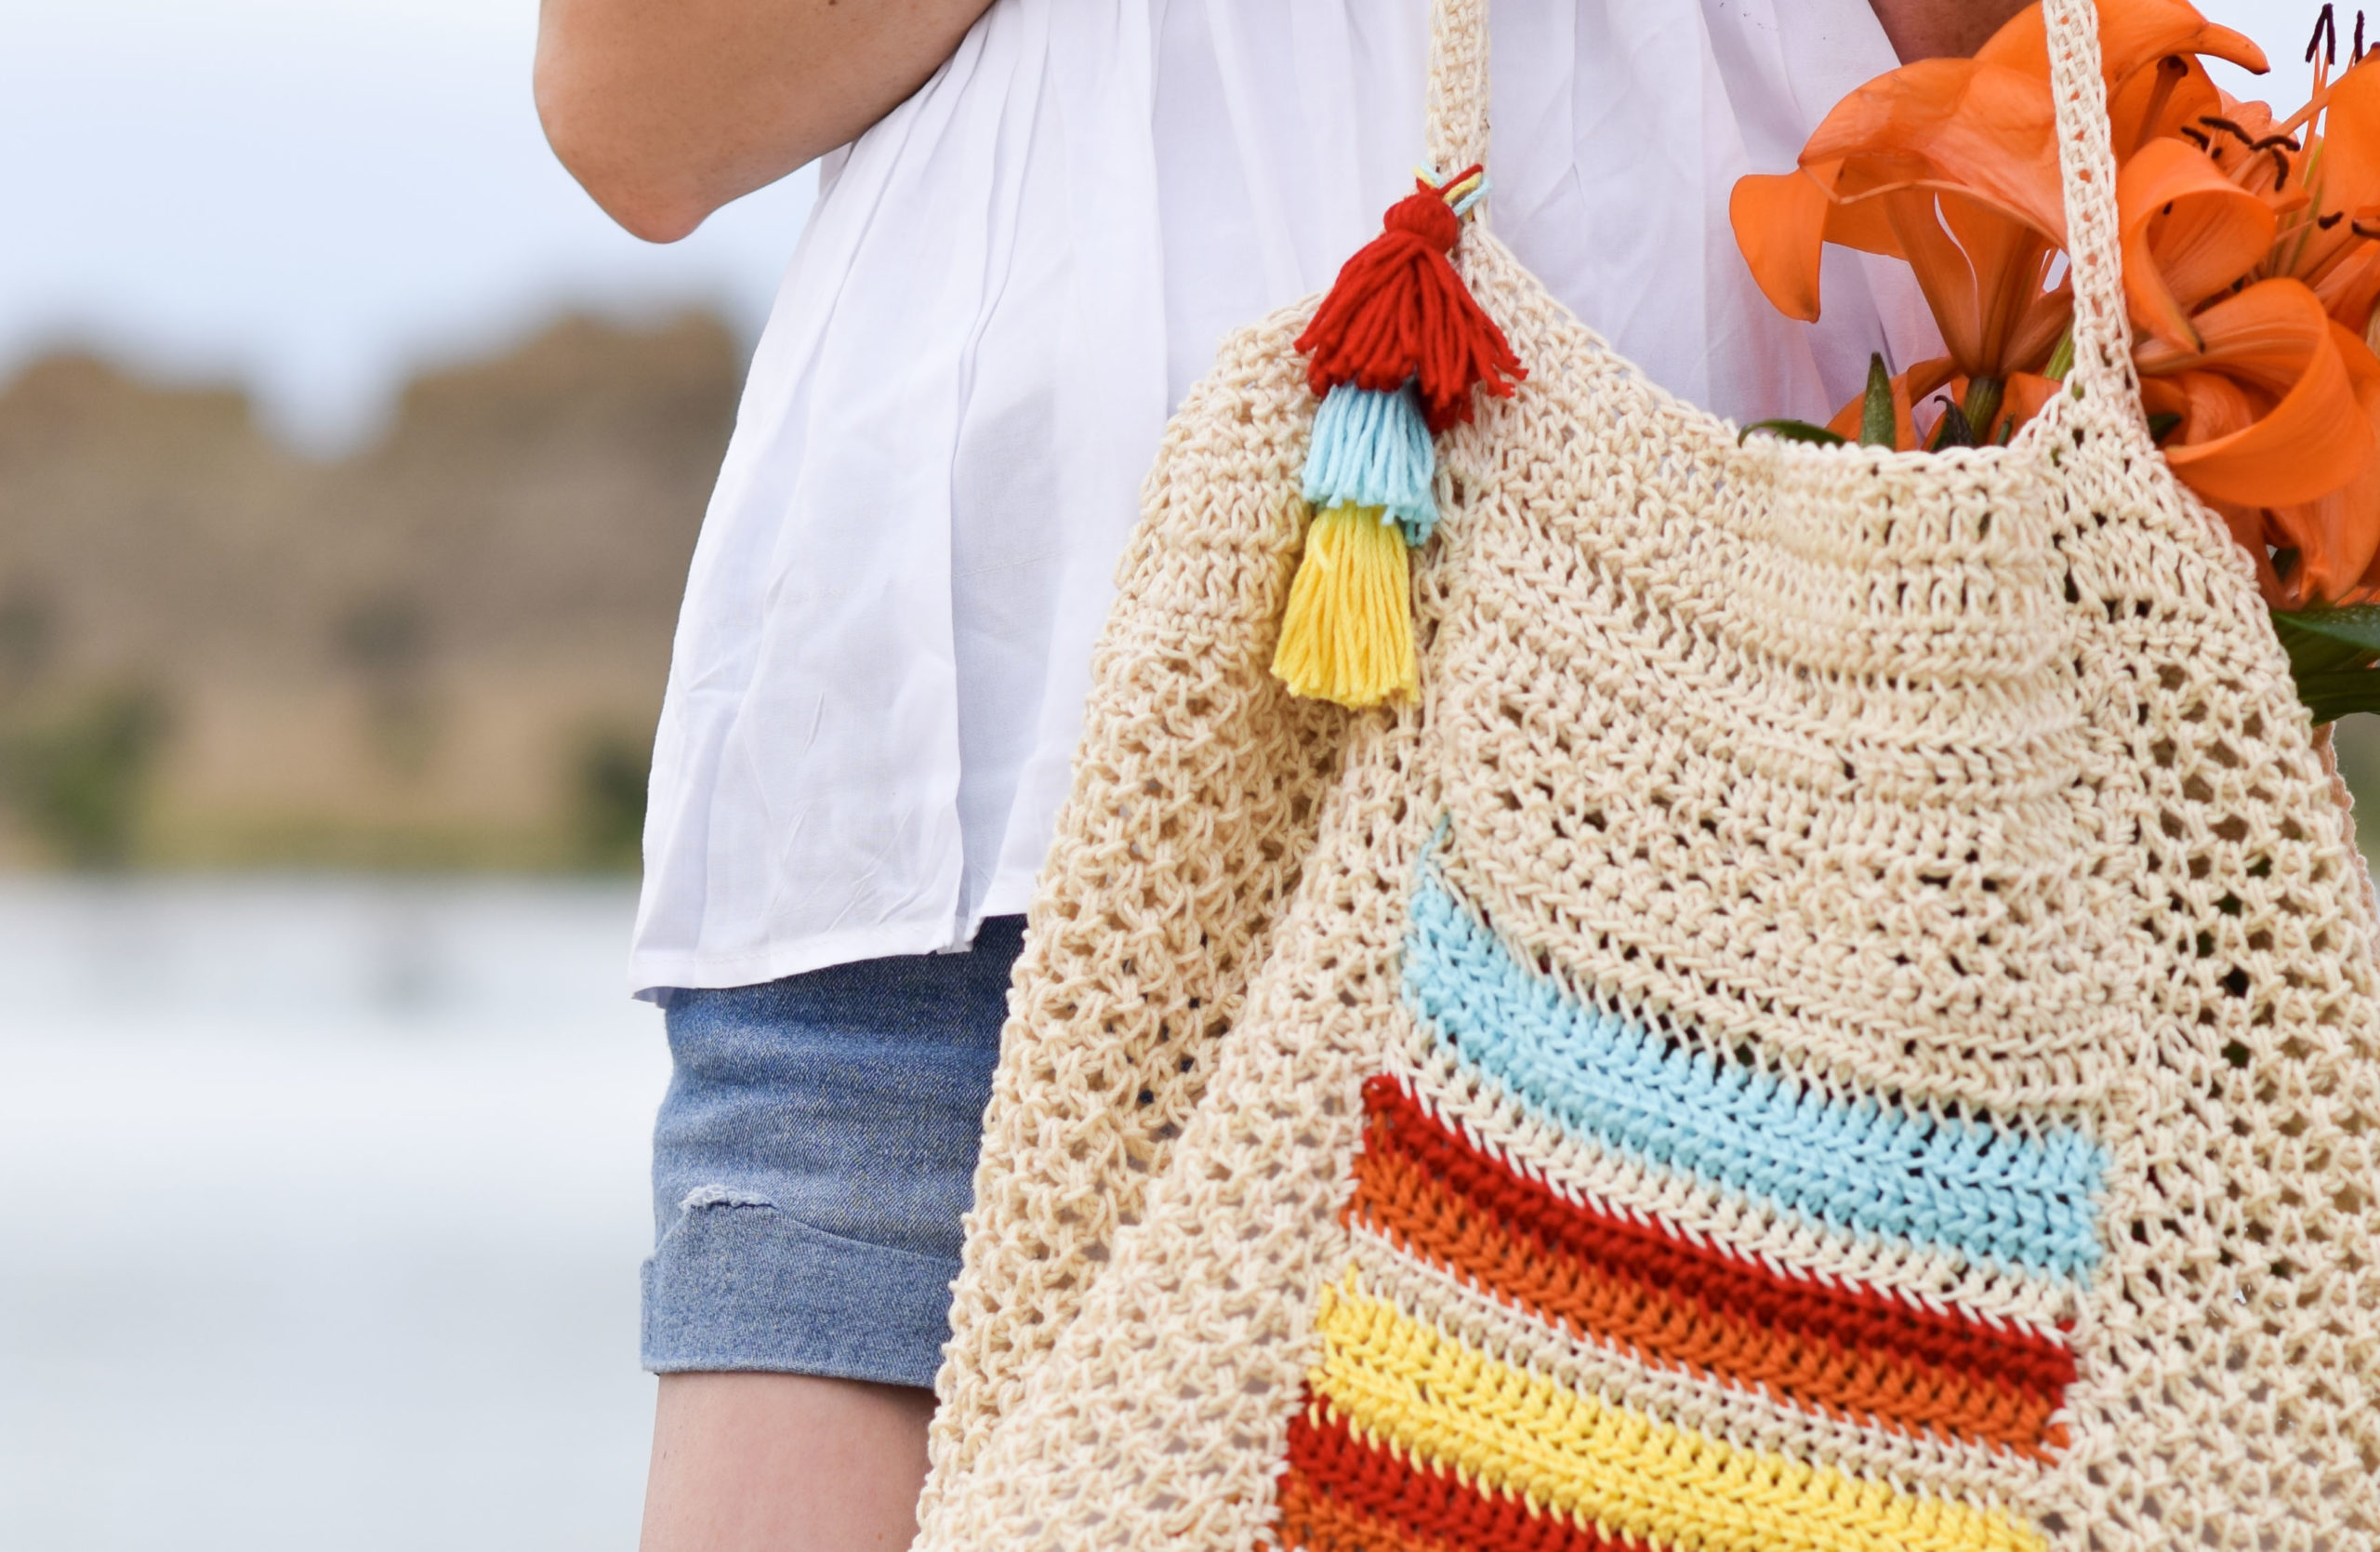 Crochet bag- Alpine tulip bag- simple, colorful and textured tote bag